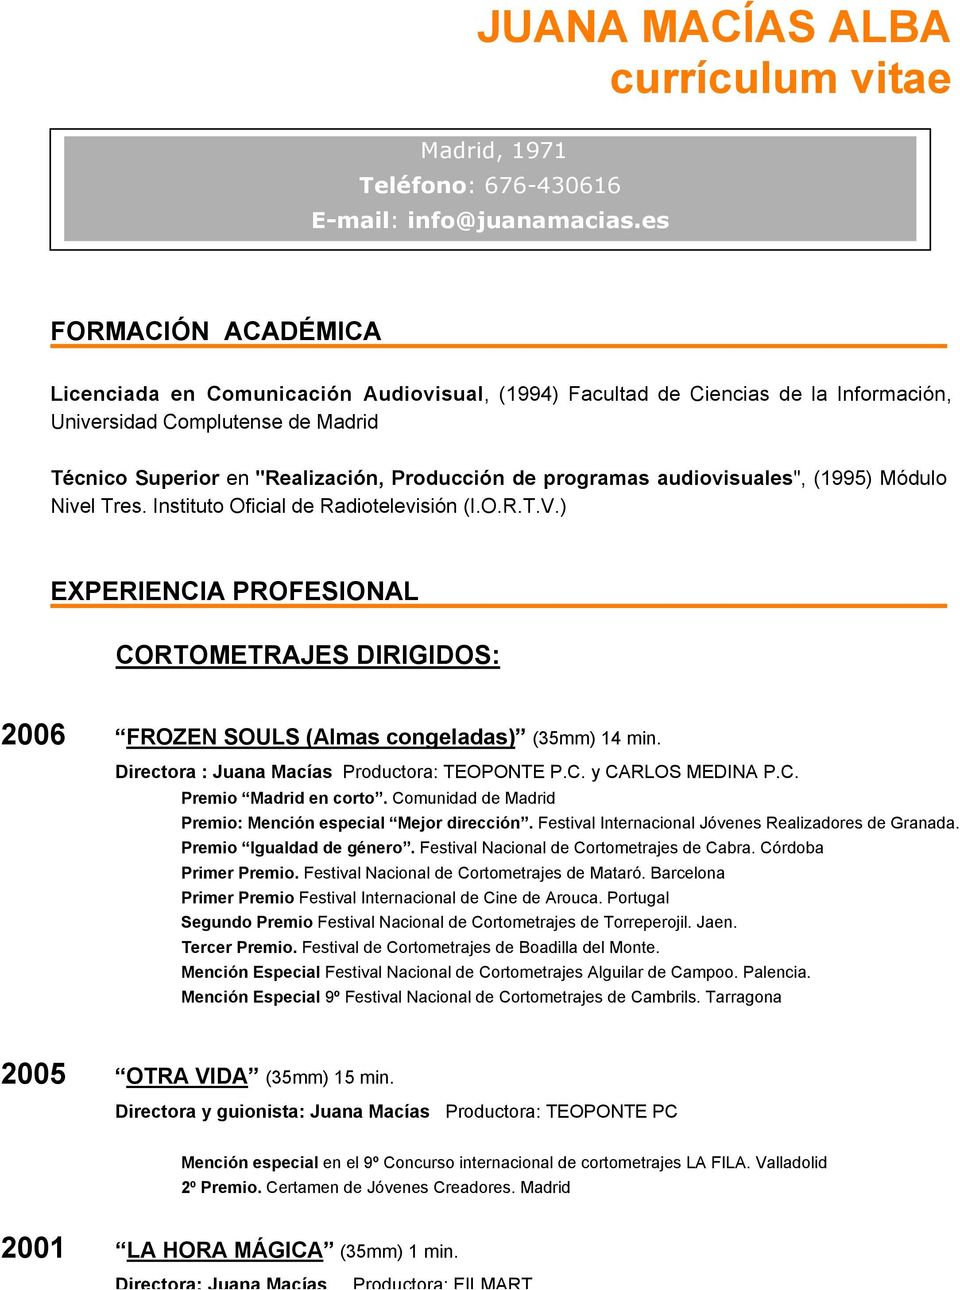 programas audiovisuales", (1995) Módulo Nivel Tres. Instituto Oficial de Radiotelevisión (I.O.R.T.V.